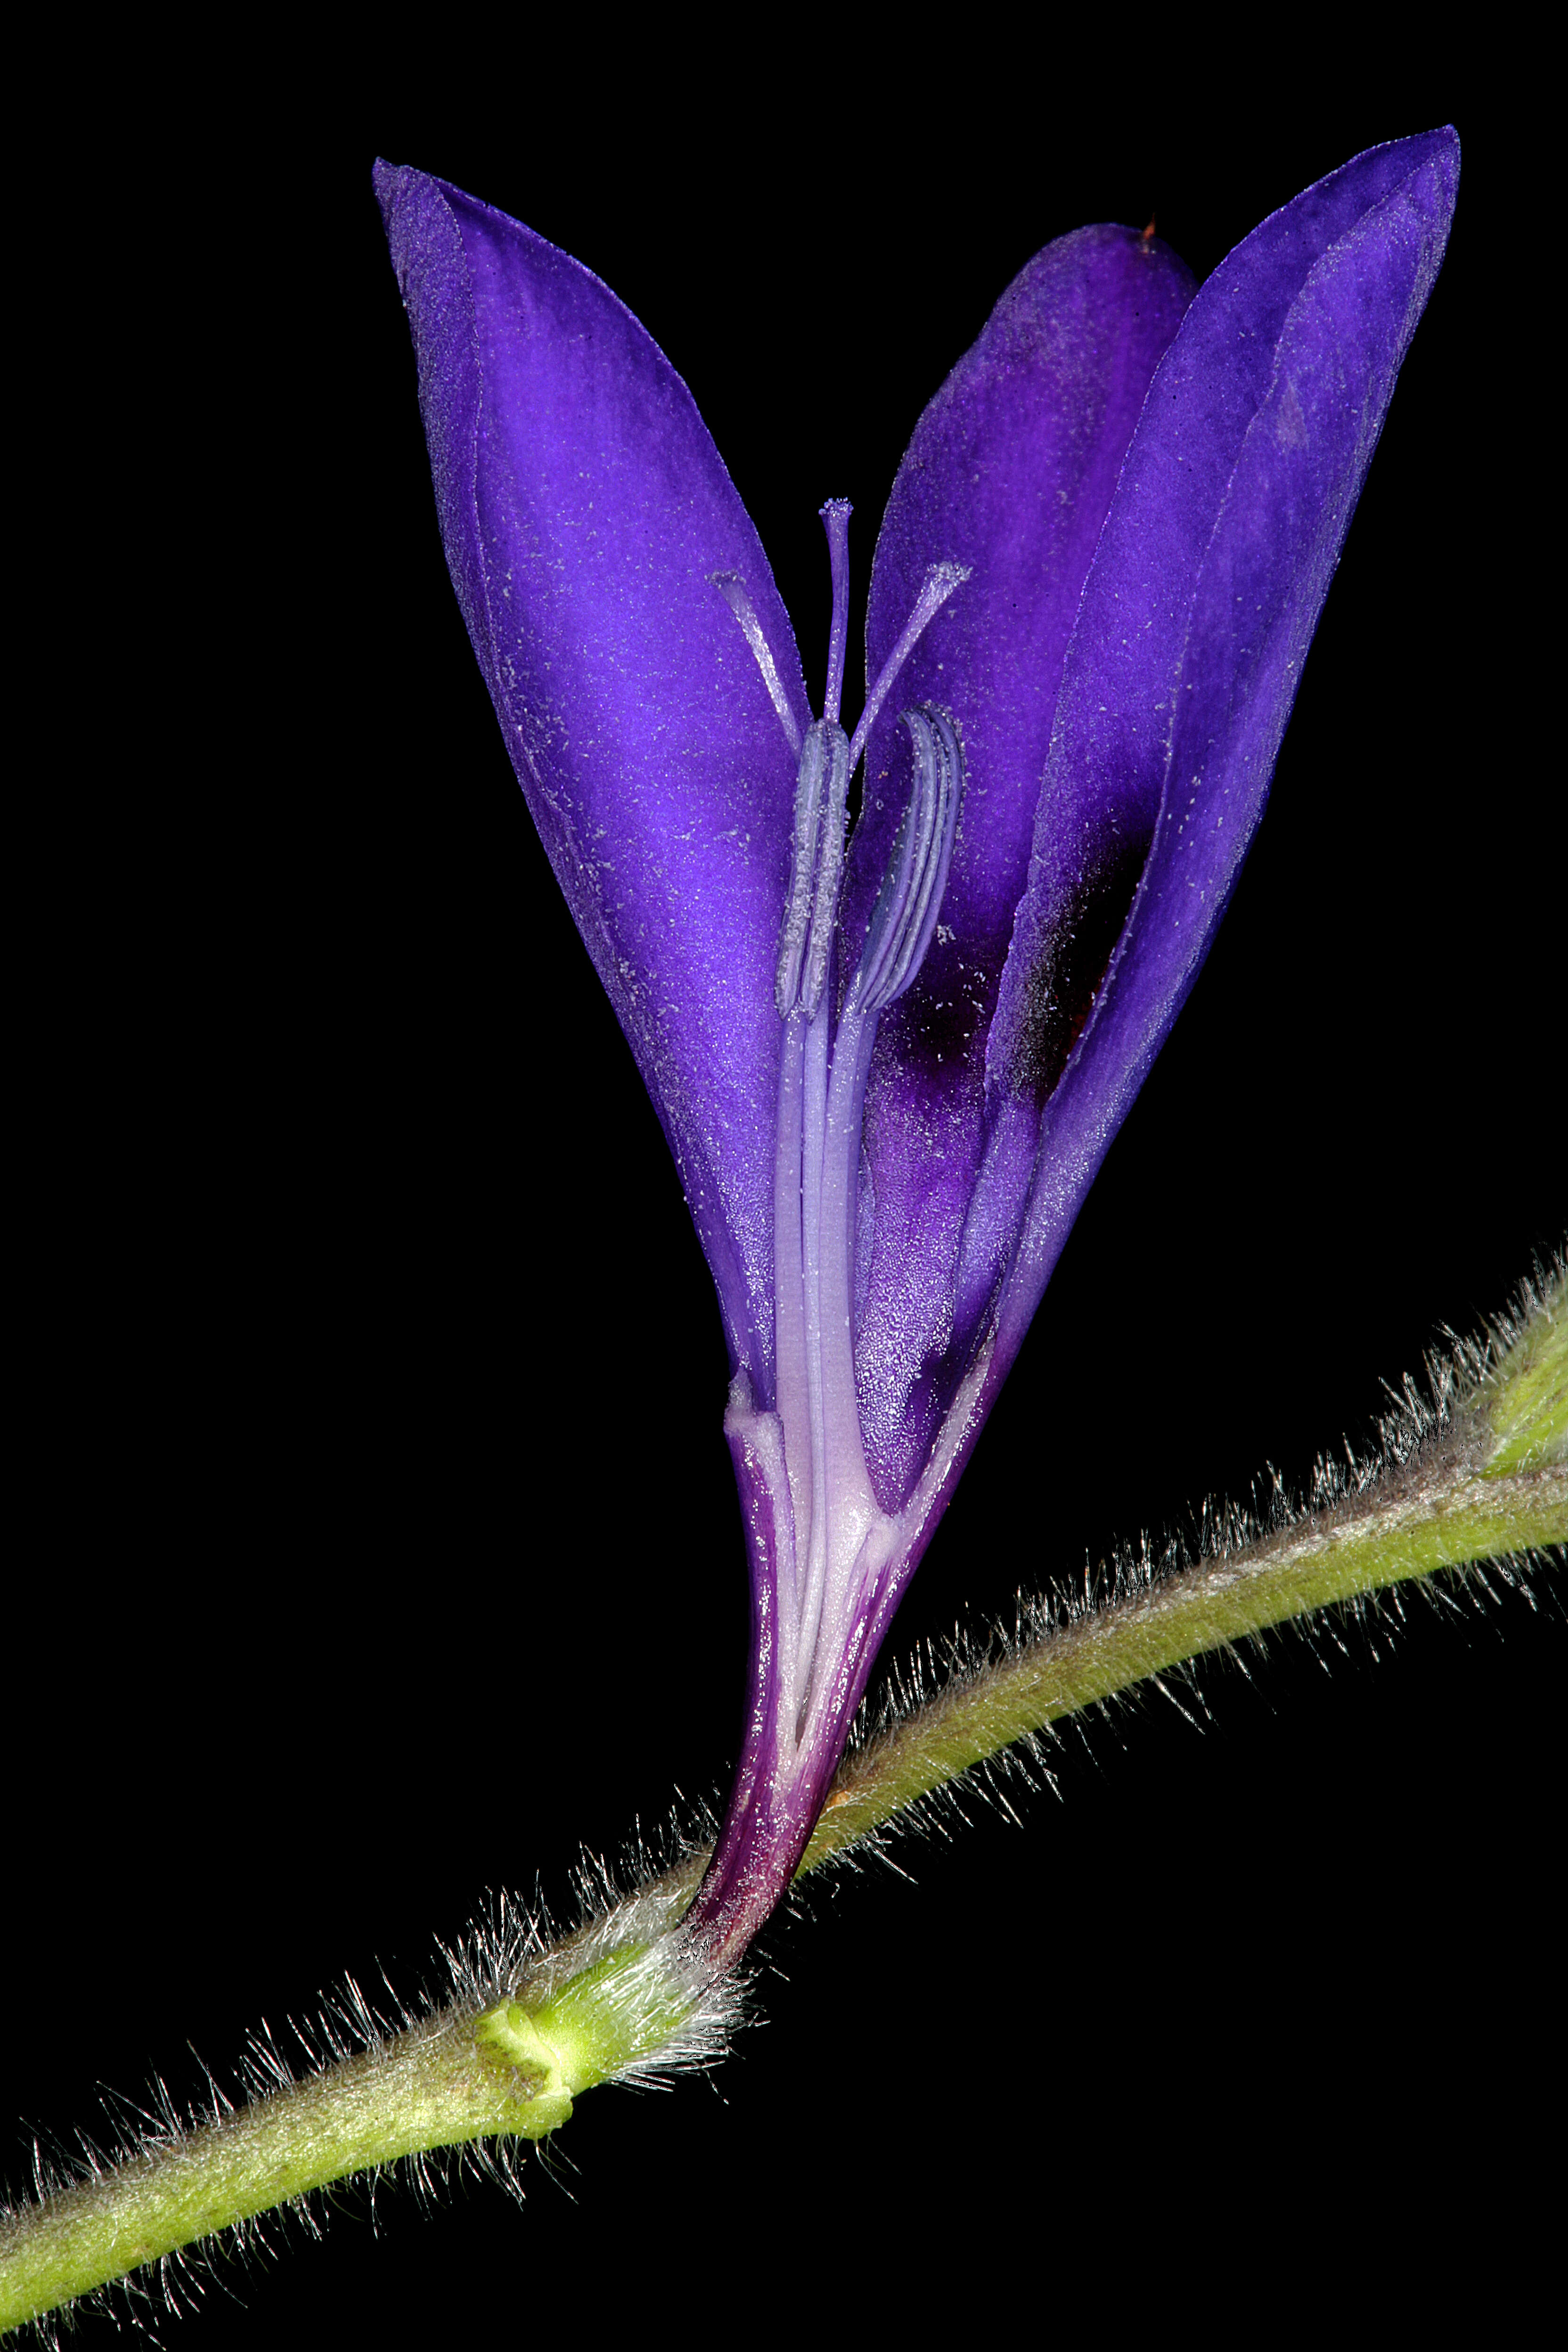 Image of Babiana angustifolia Sweet